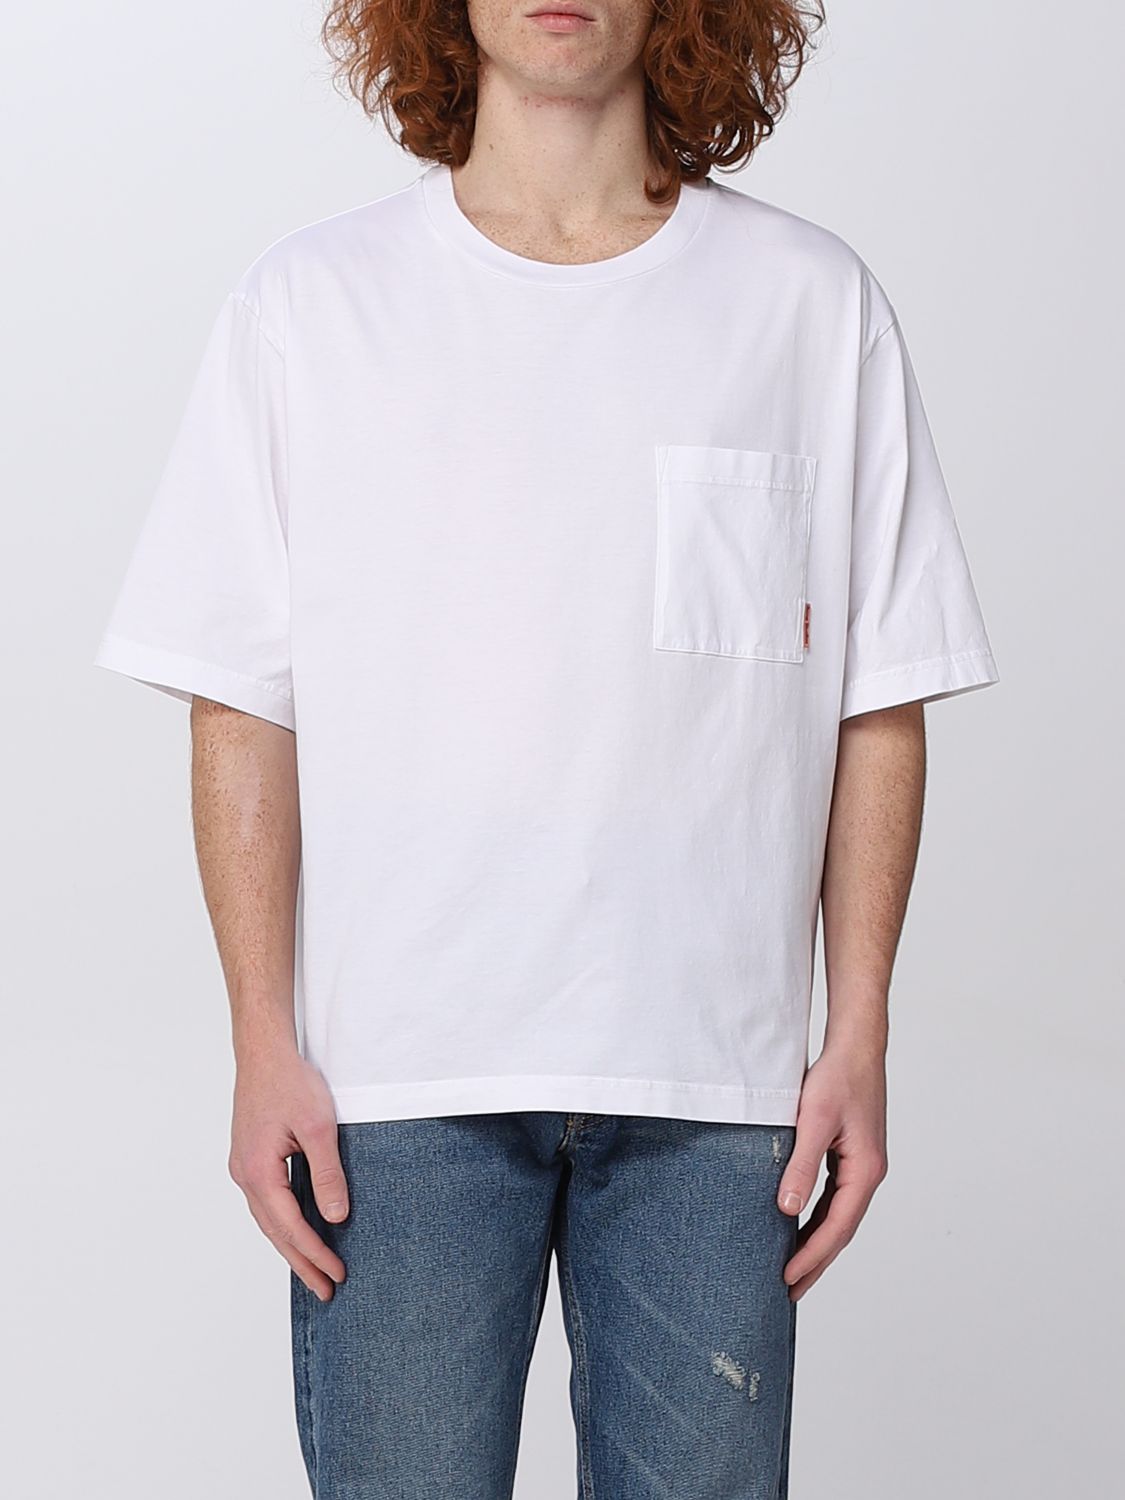 ACNE STUDIOS: t-shirt for man - White | Acne Studios t-shirt CL0198 ...